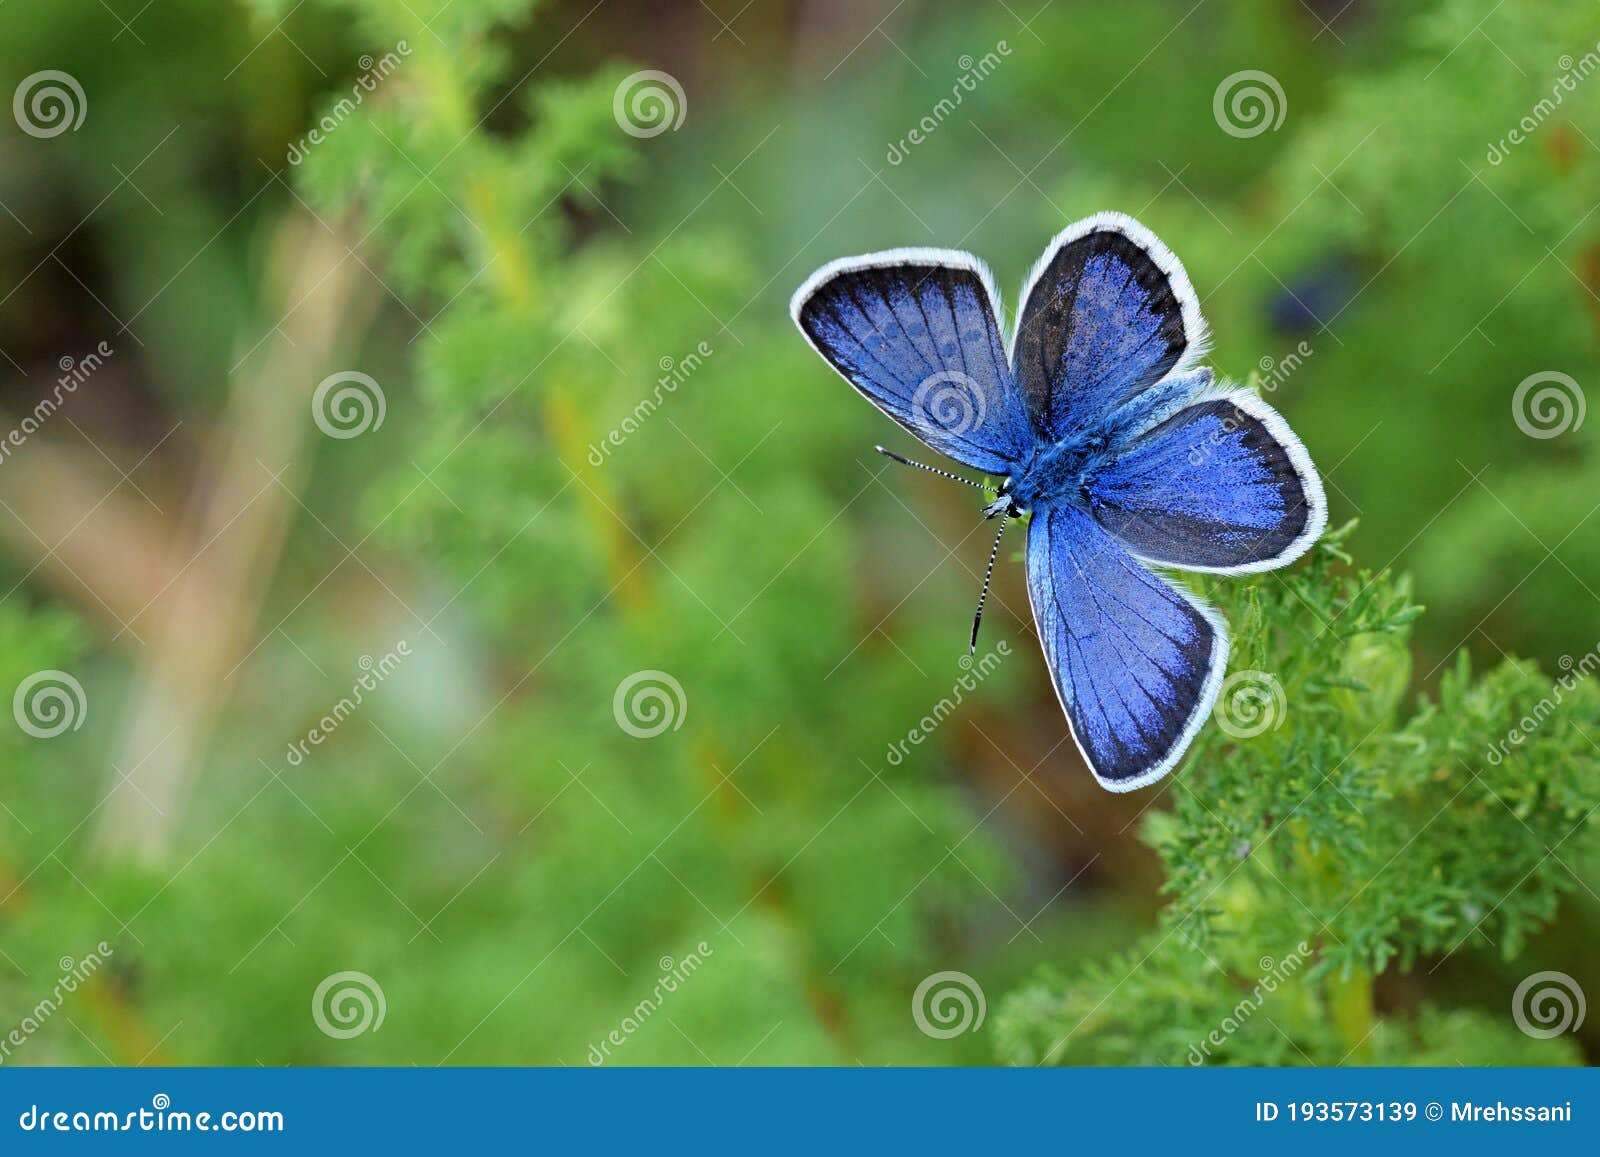 plebejus idas , the idas blue or northern blue butterfly